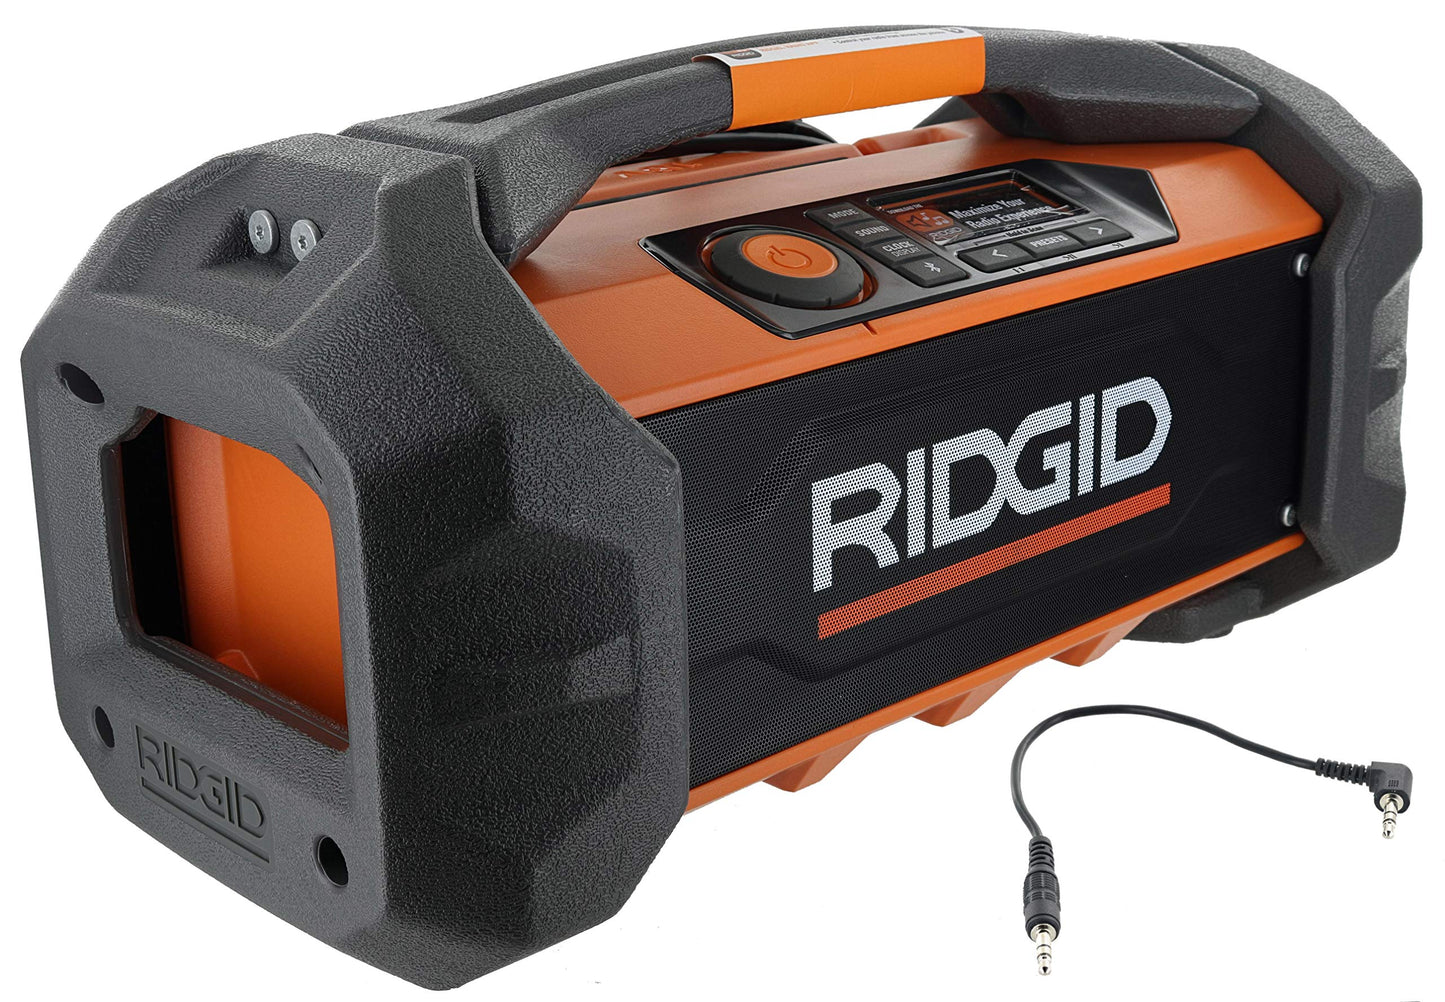 18V Hybrid Jobsite Radio with Bluetooth Technology (Tool Only), Ridgid